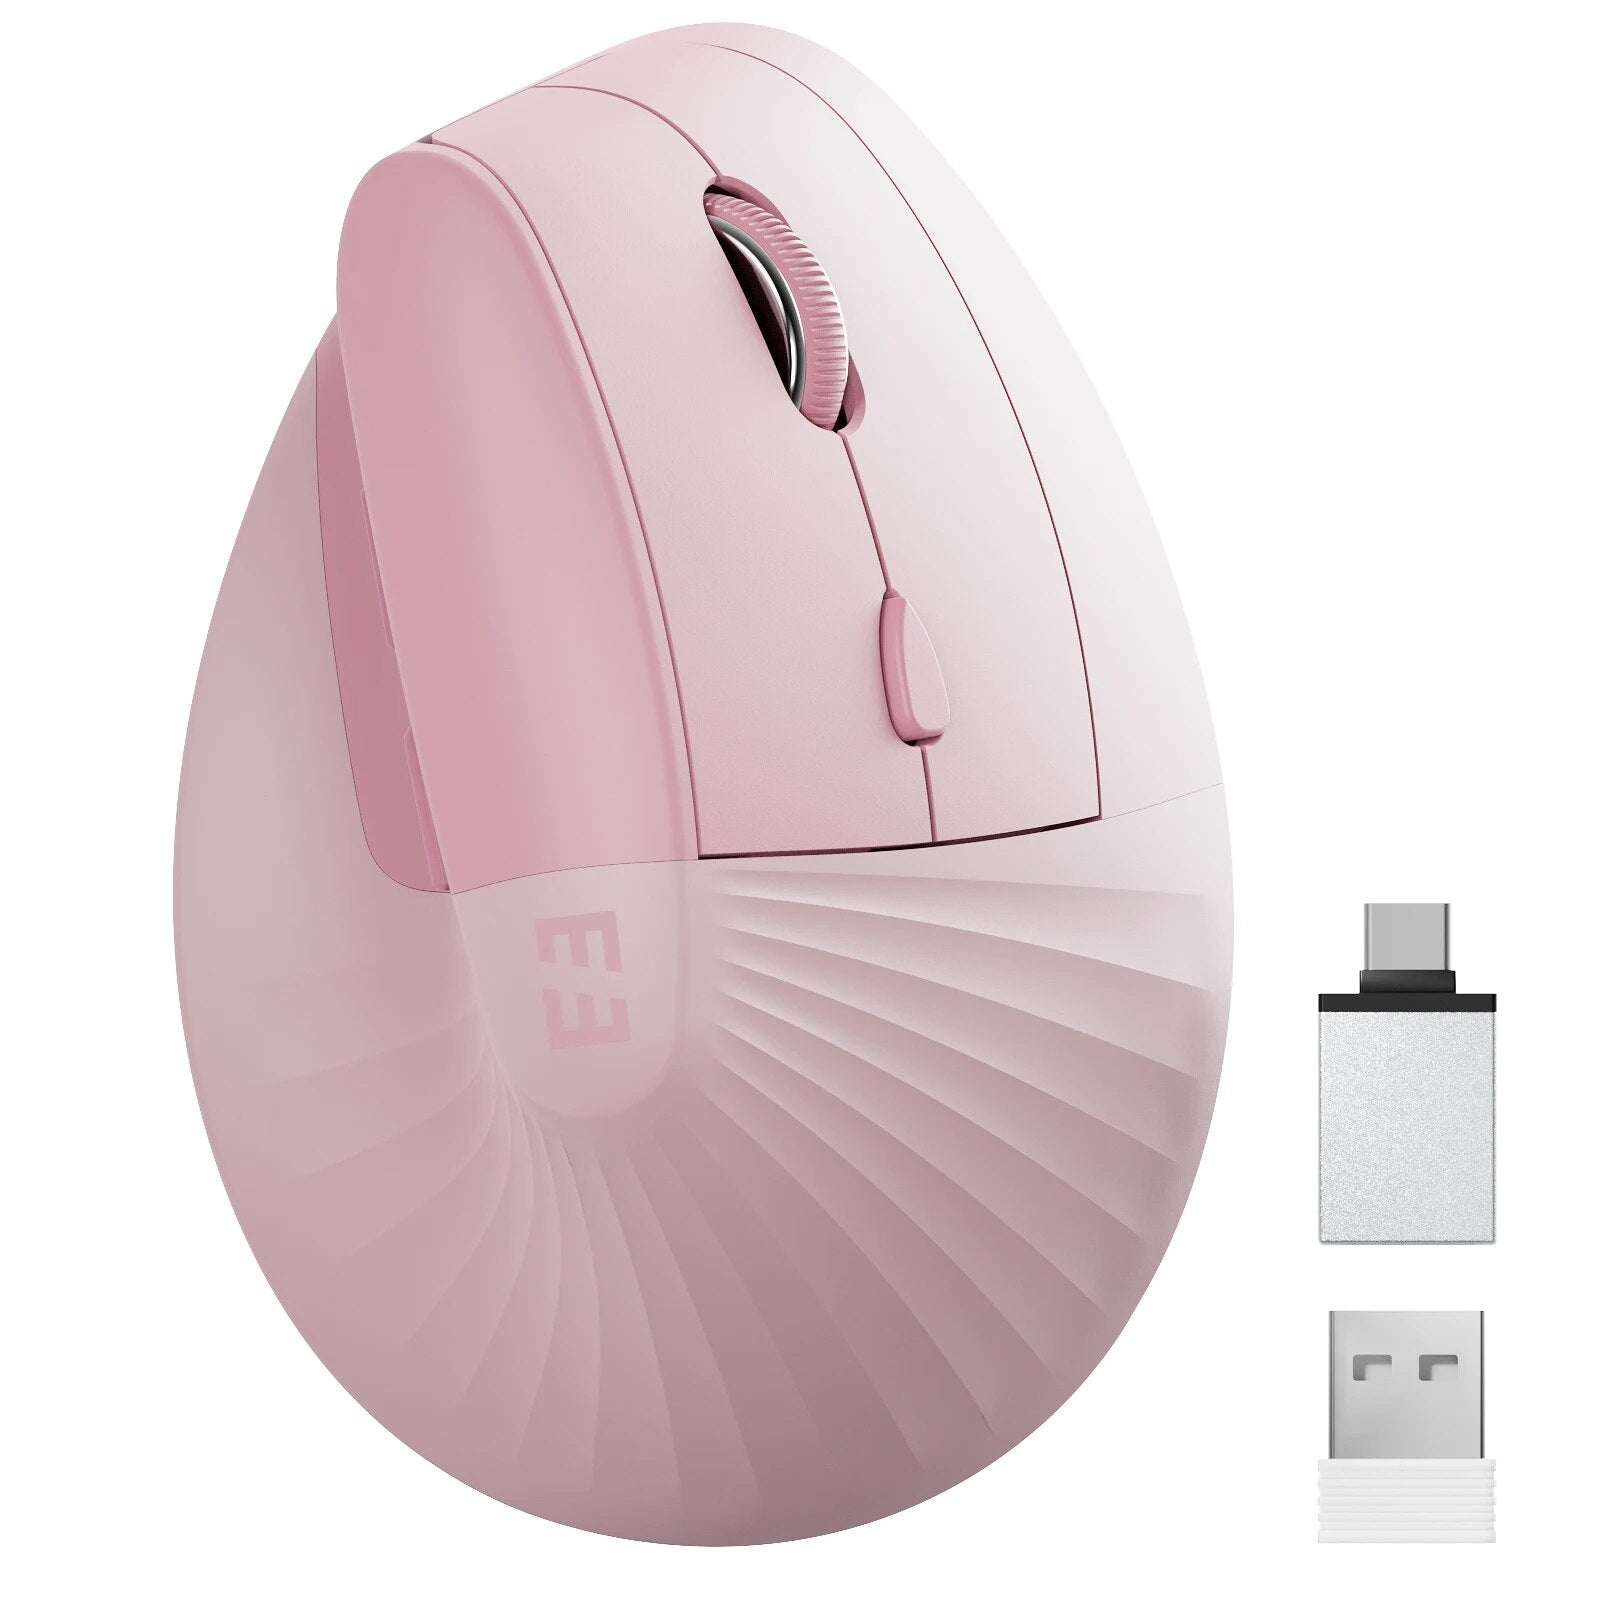 M300 Ergonomic Mouse Wireless